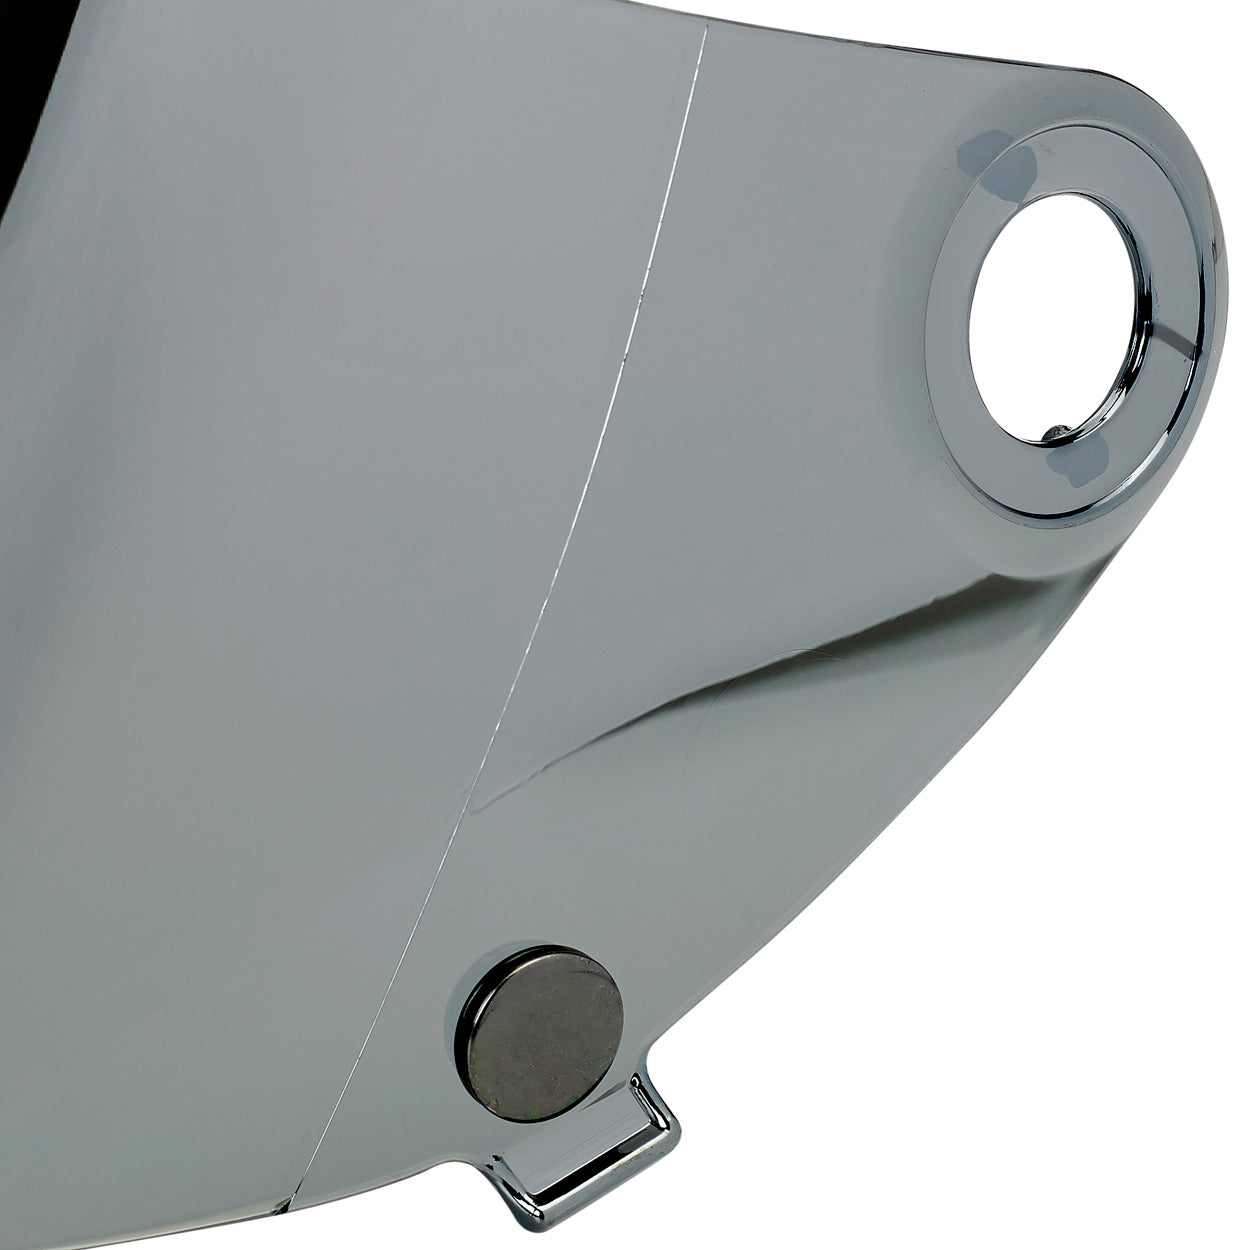 Gringo S Gen 2 Flat Shield - Chrome Mirror